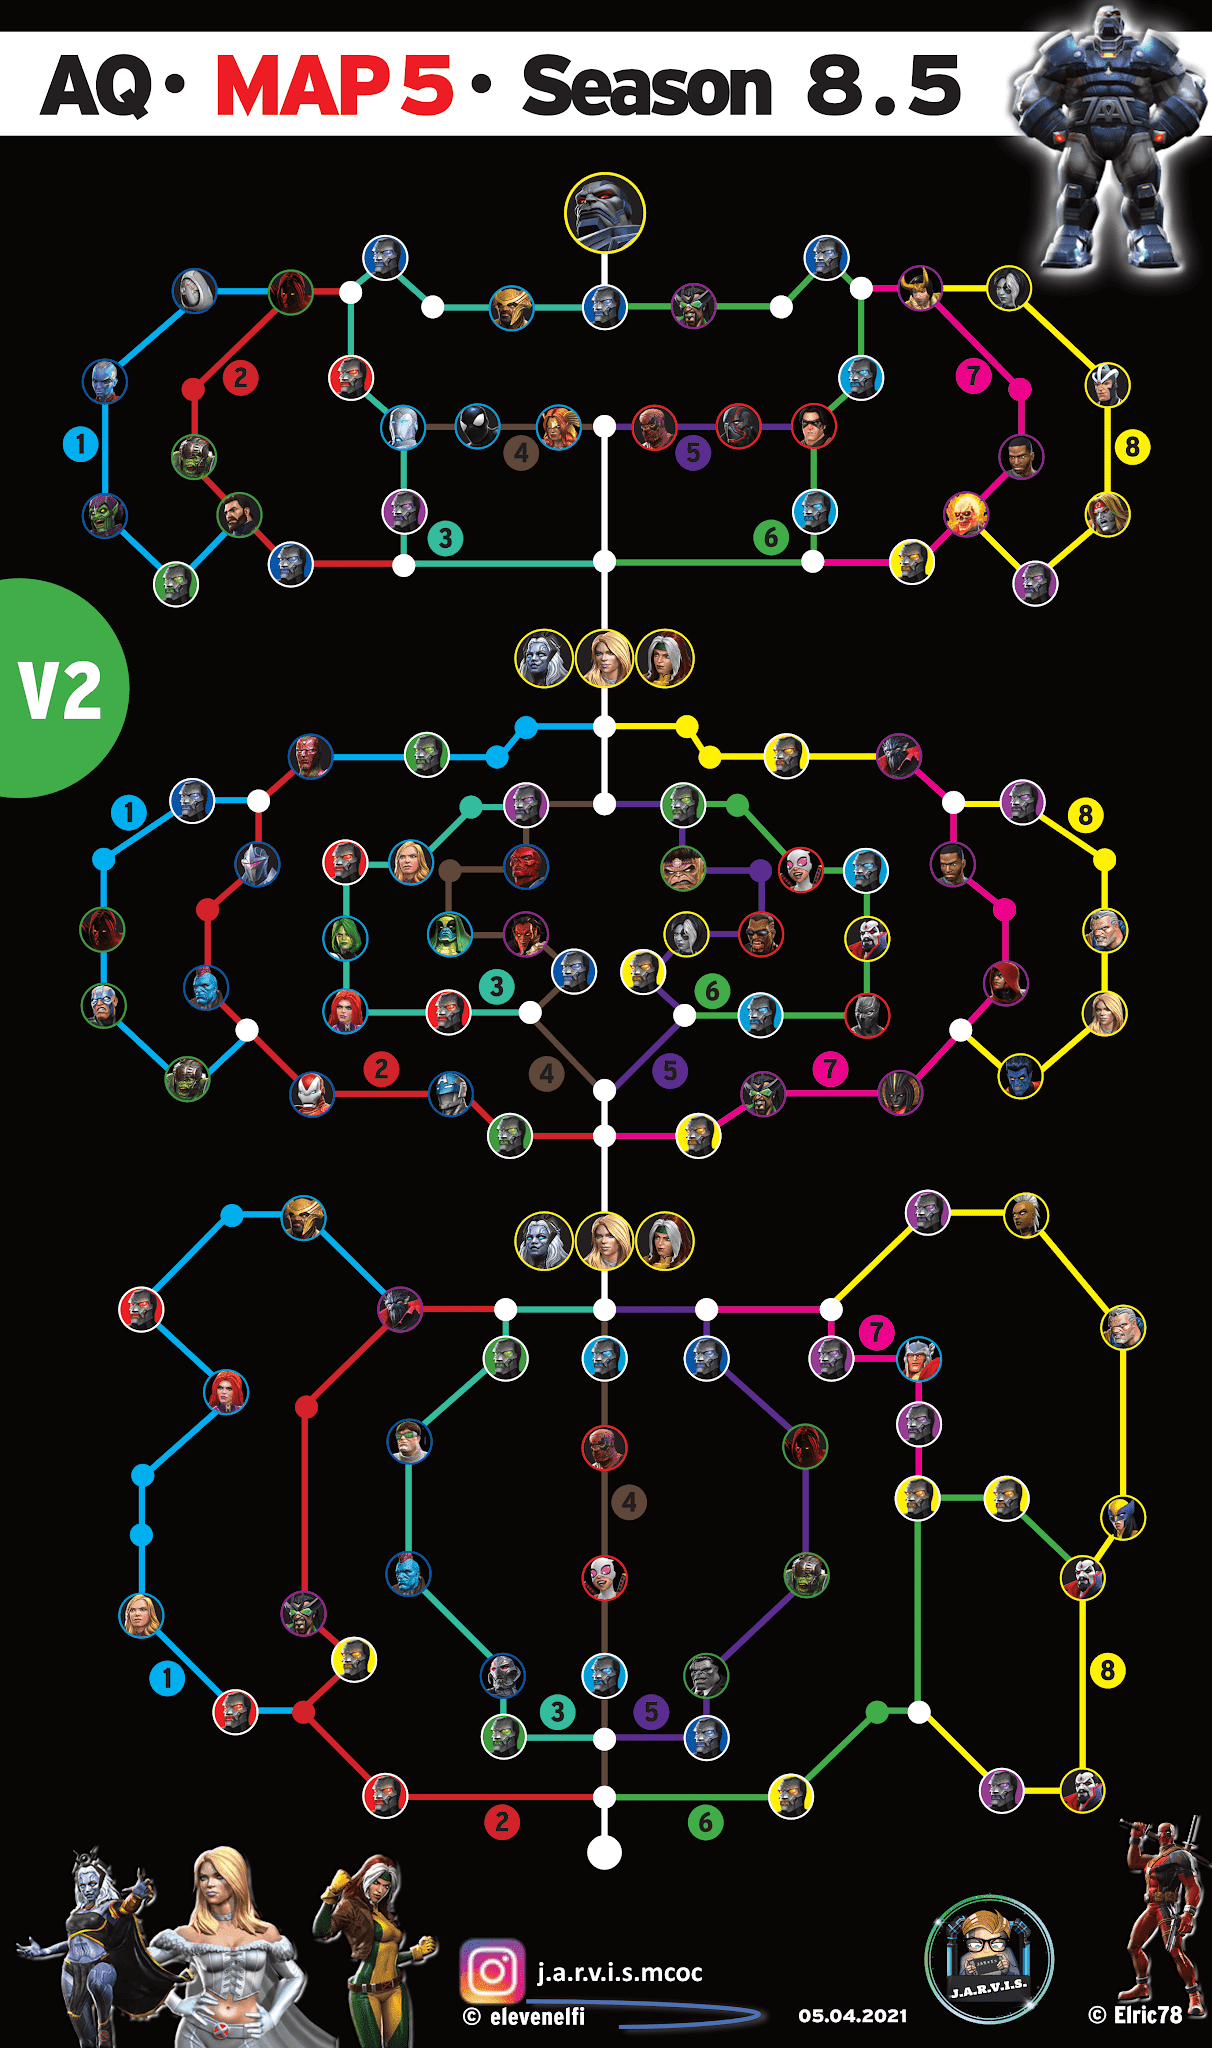 AQ Map 5 V2